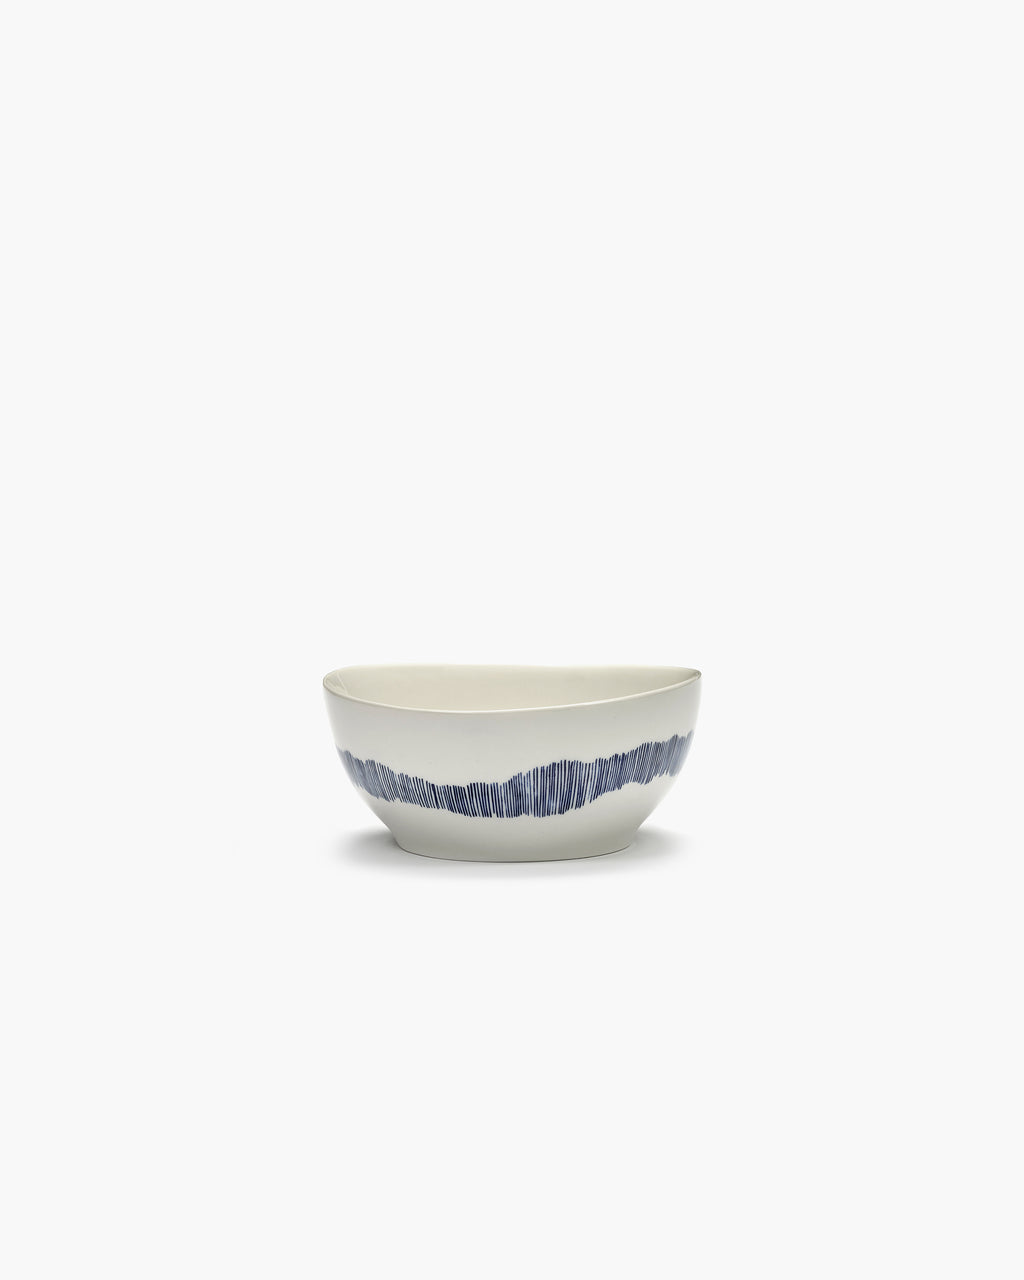 Serax Small White and Blue Swirl Stripes Bowl